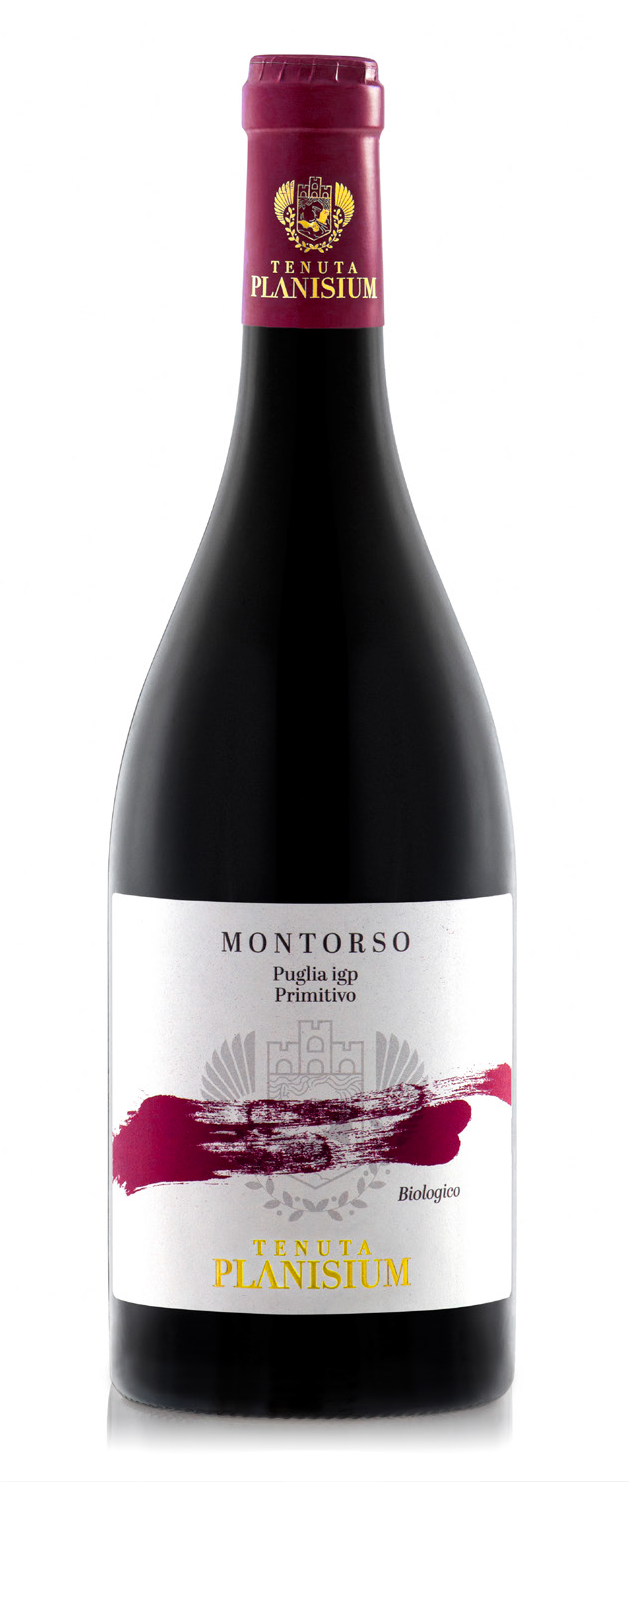 Montorso Red Wine from Uve Primitivo Tenuta Planisium